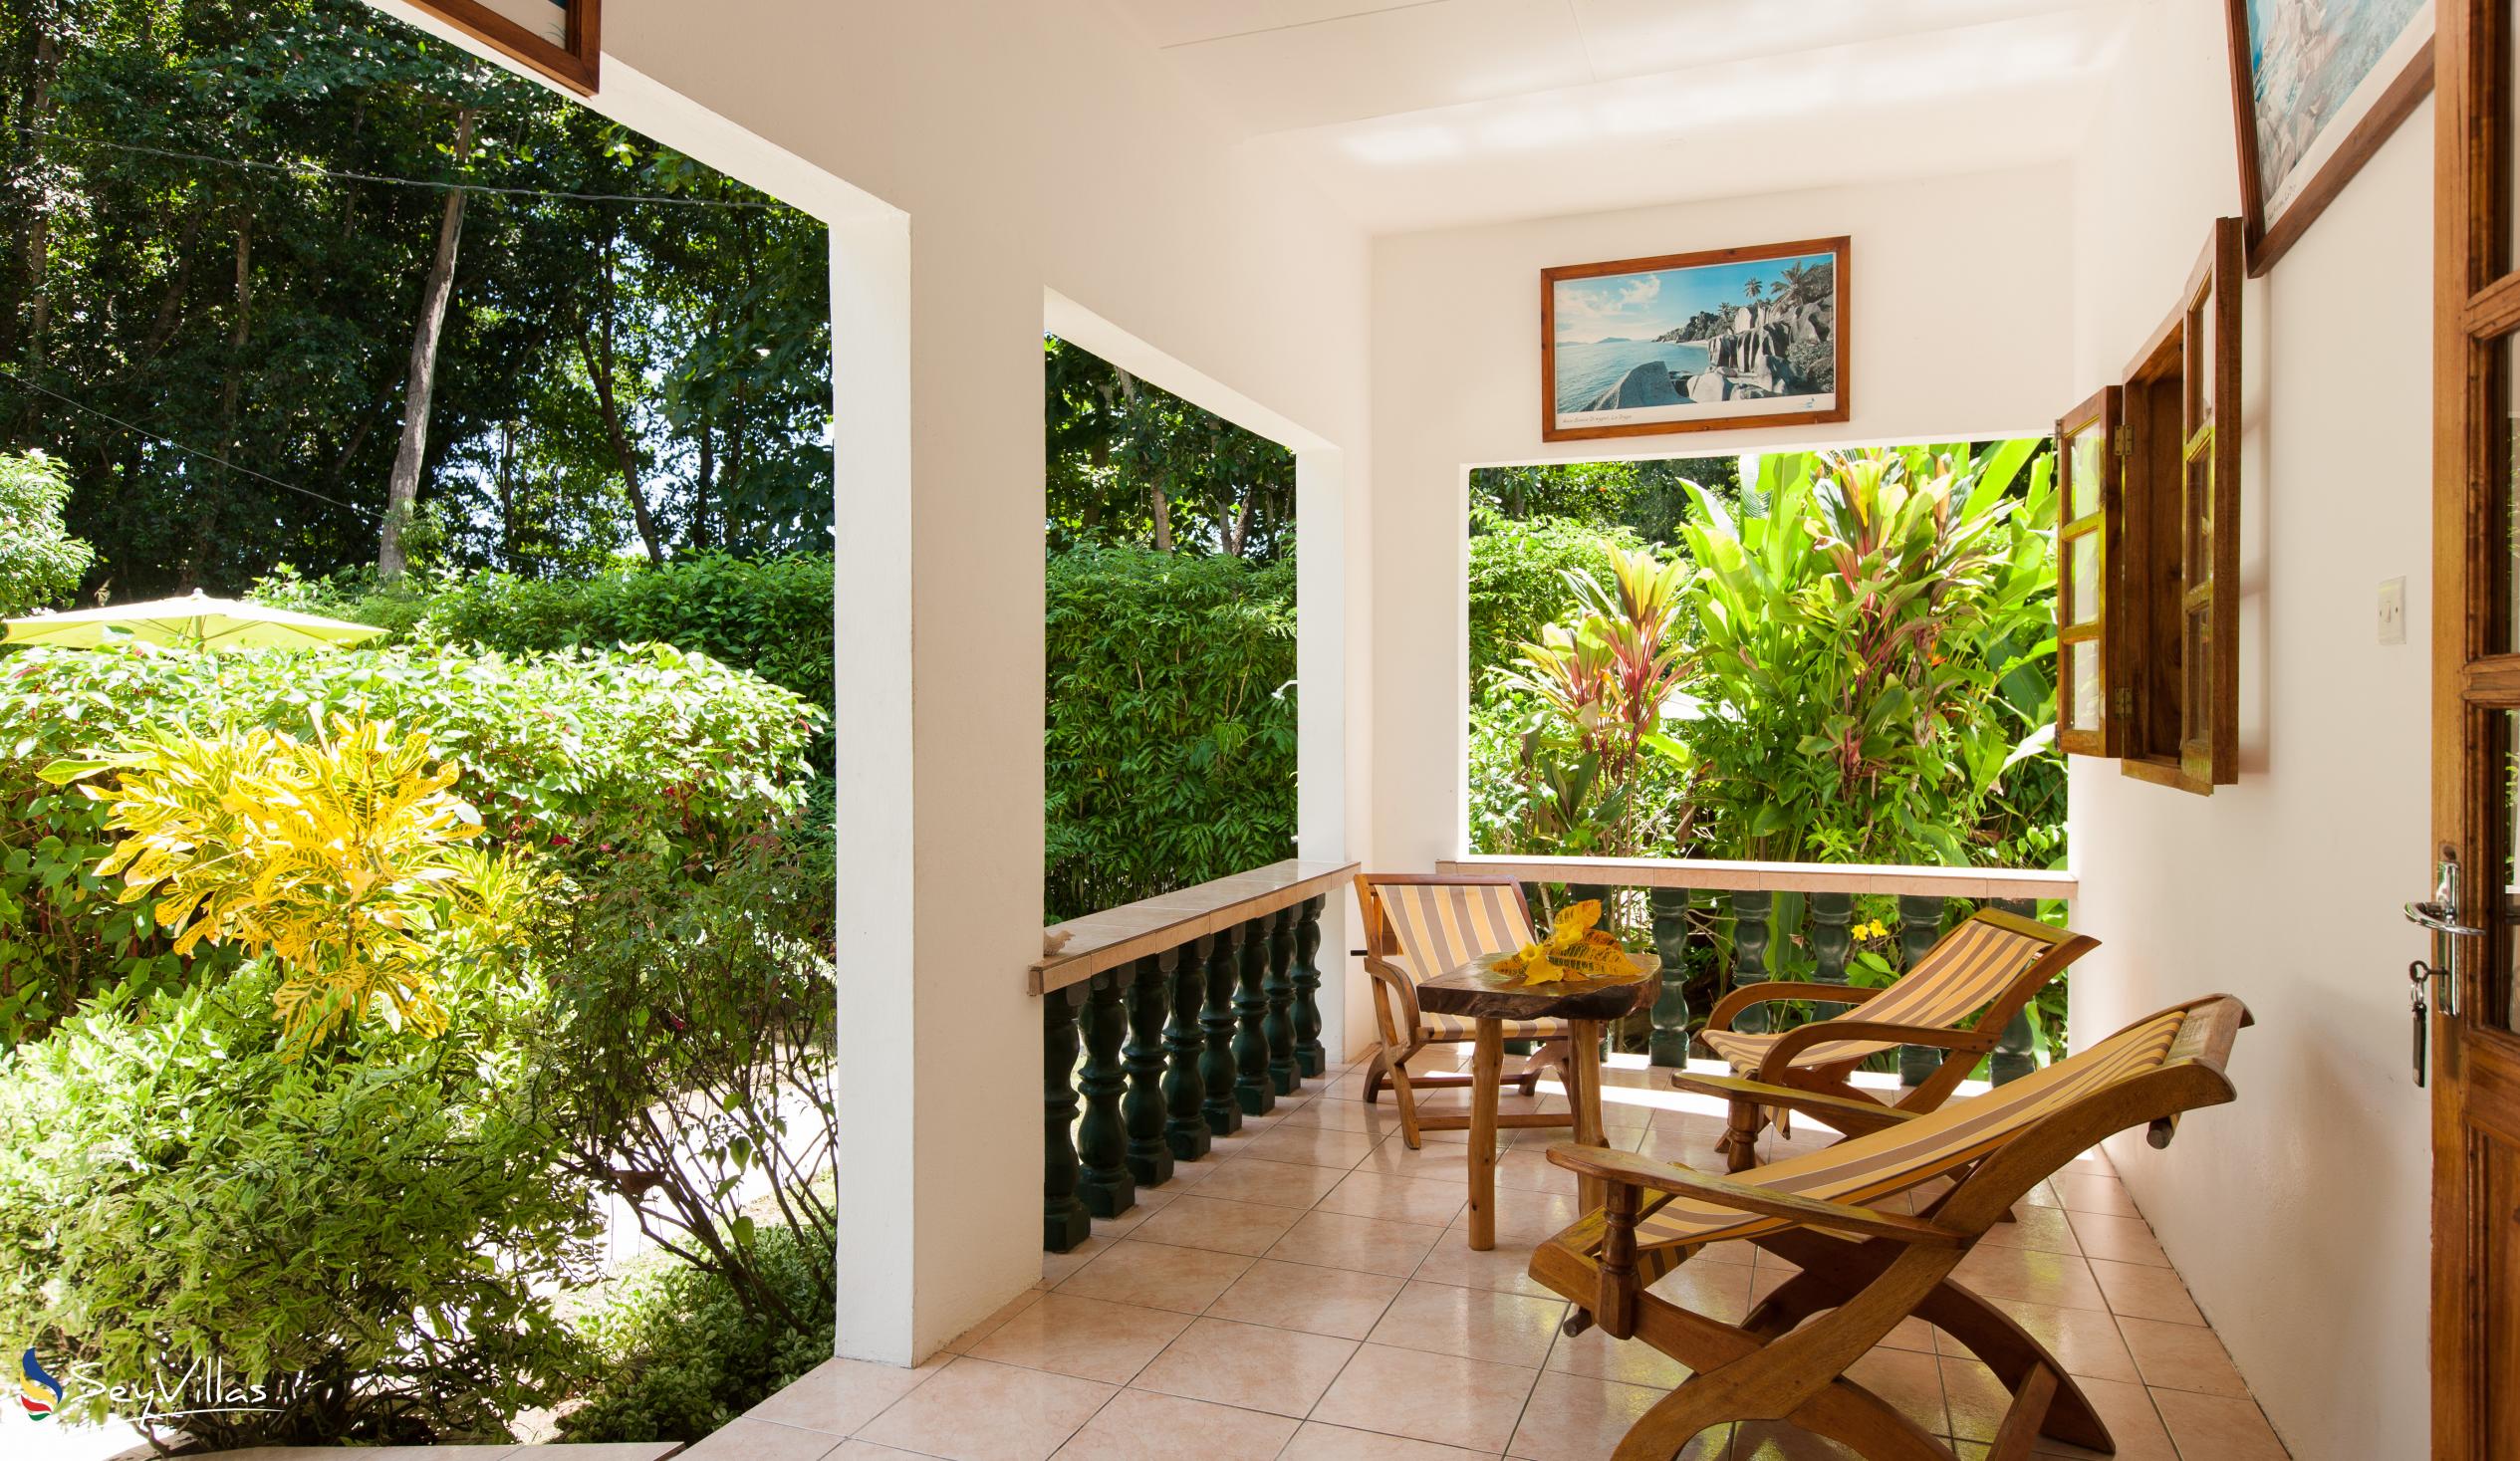 Foto 46: Tannette's Villa - Innenbereich - La Digue (Seychellen)